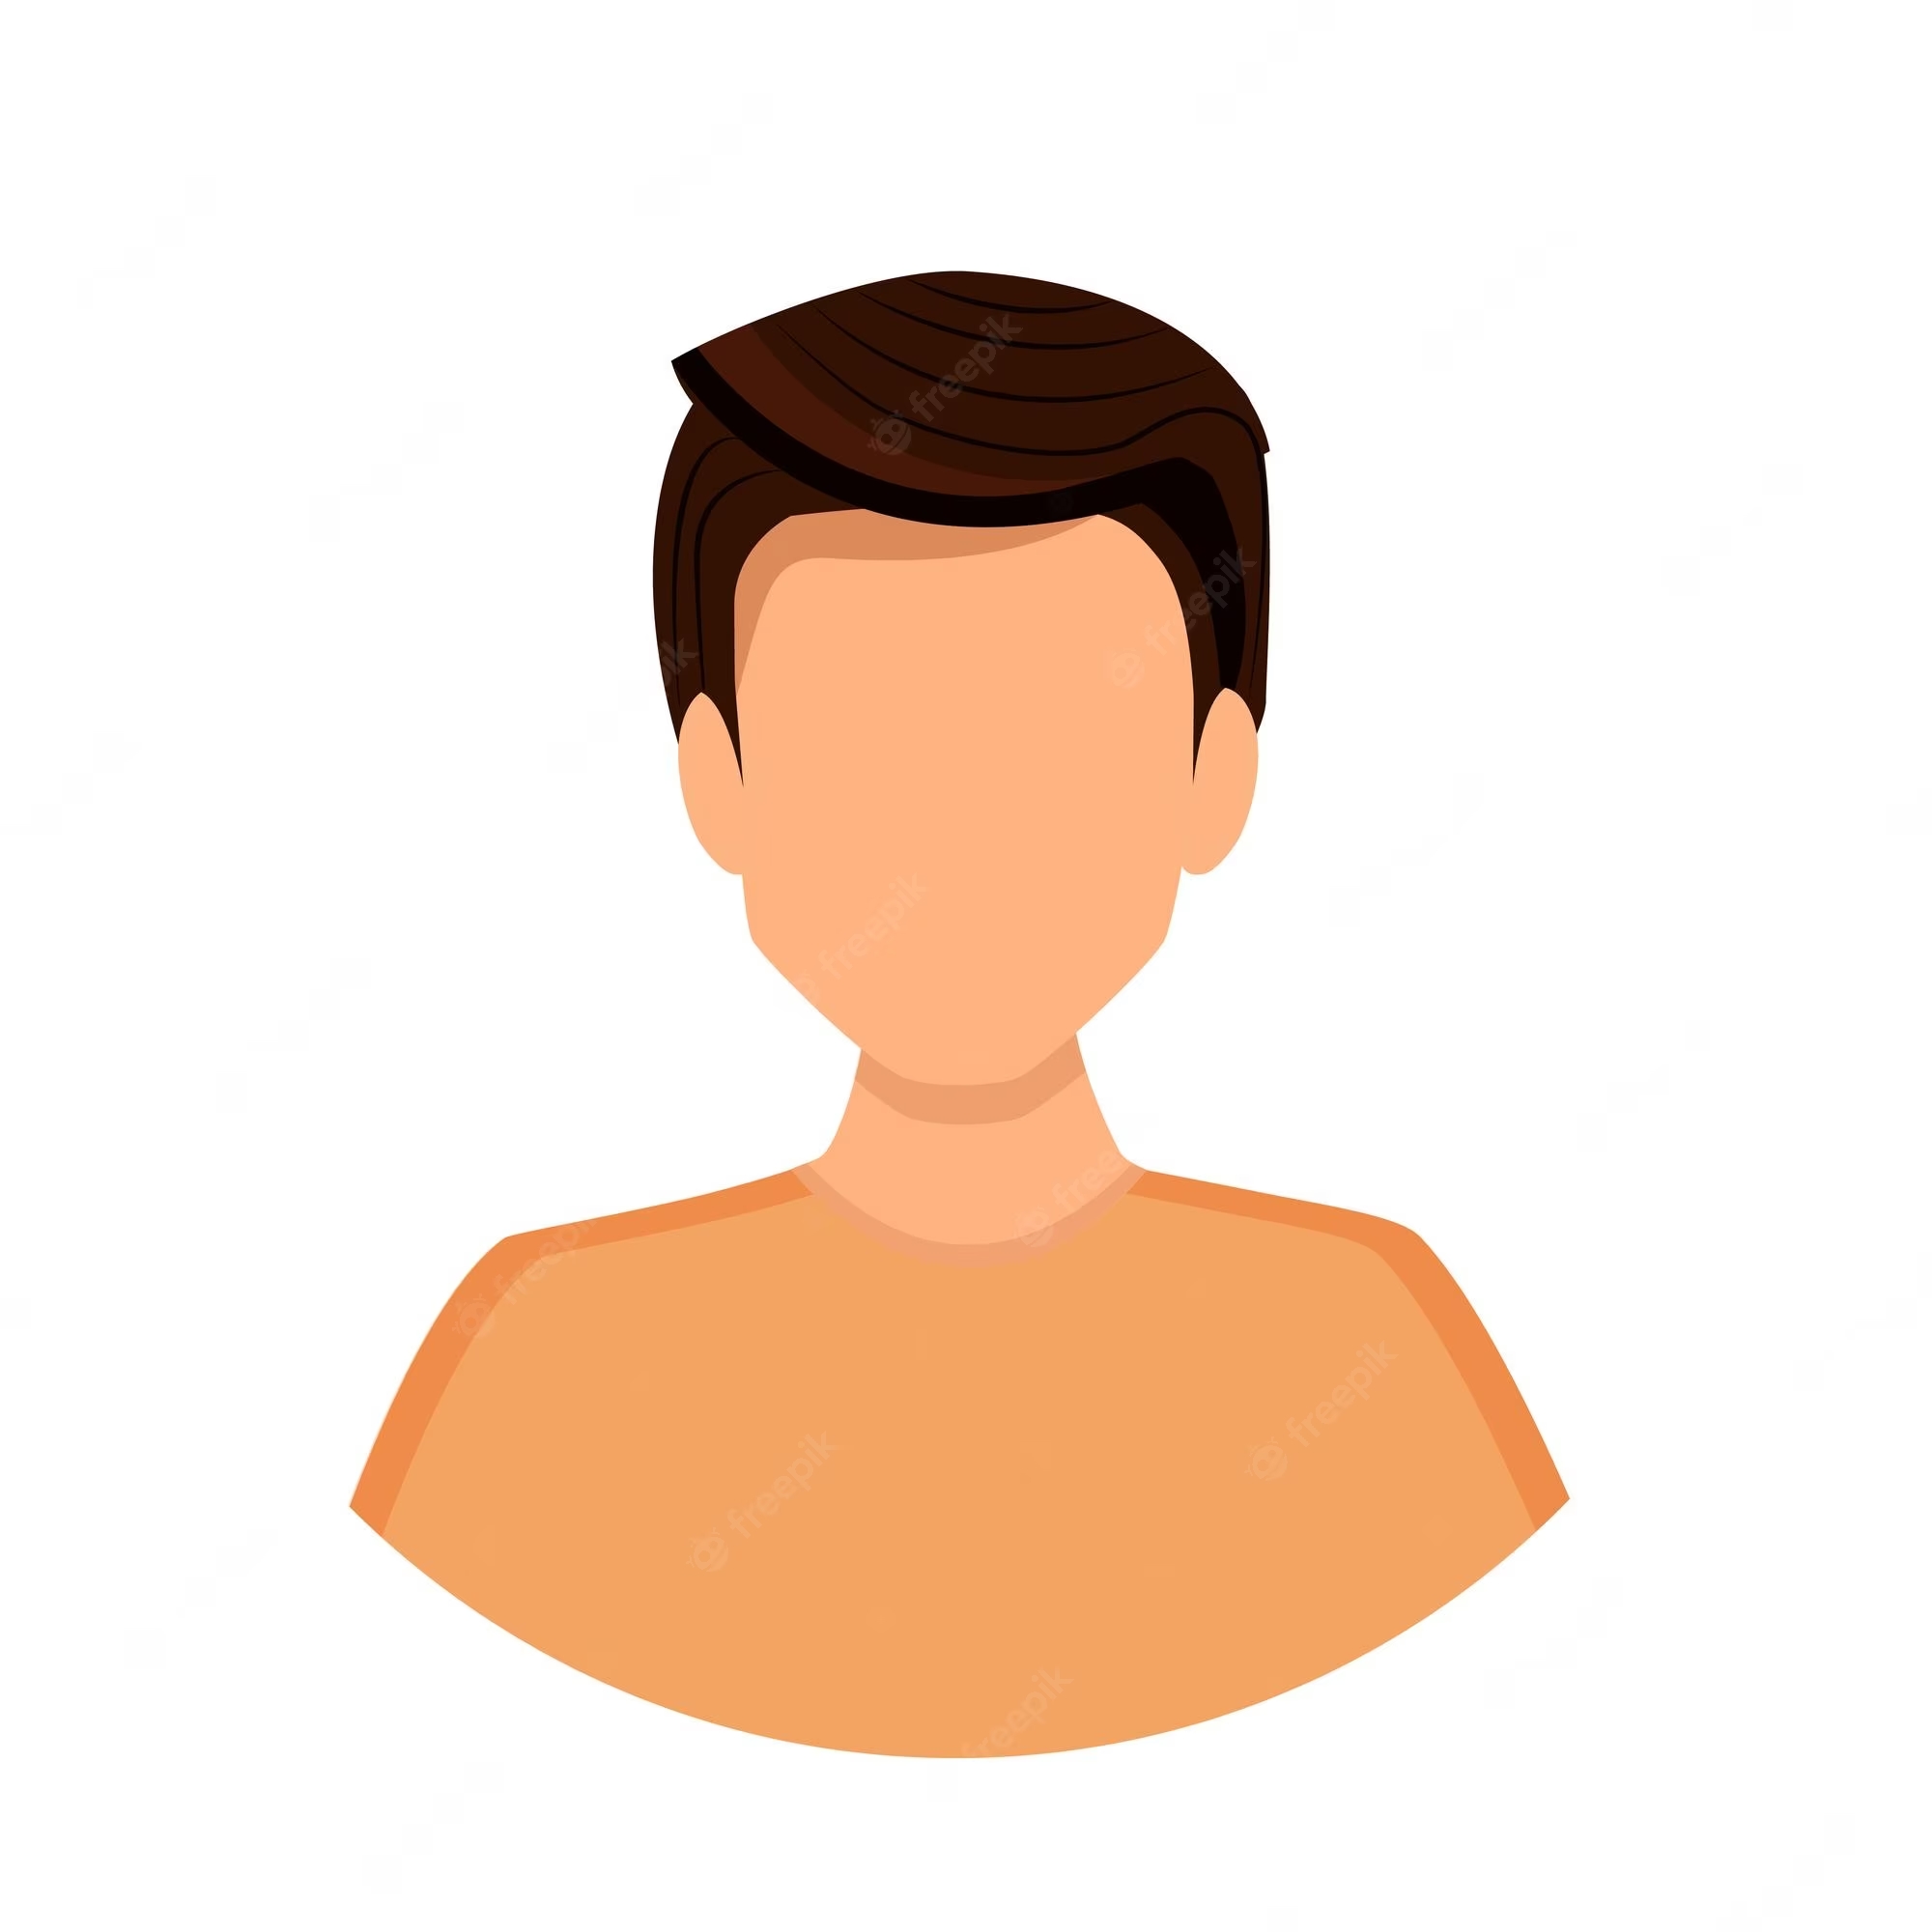 brunette-man-avatar-portrait-young-guy-vector-illustration-face_217290-1035